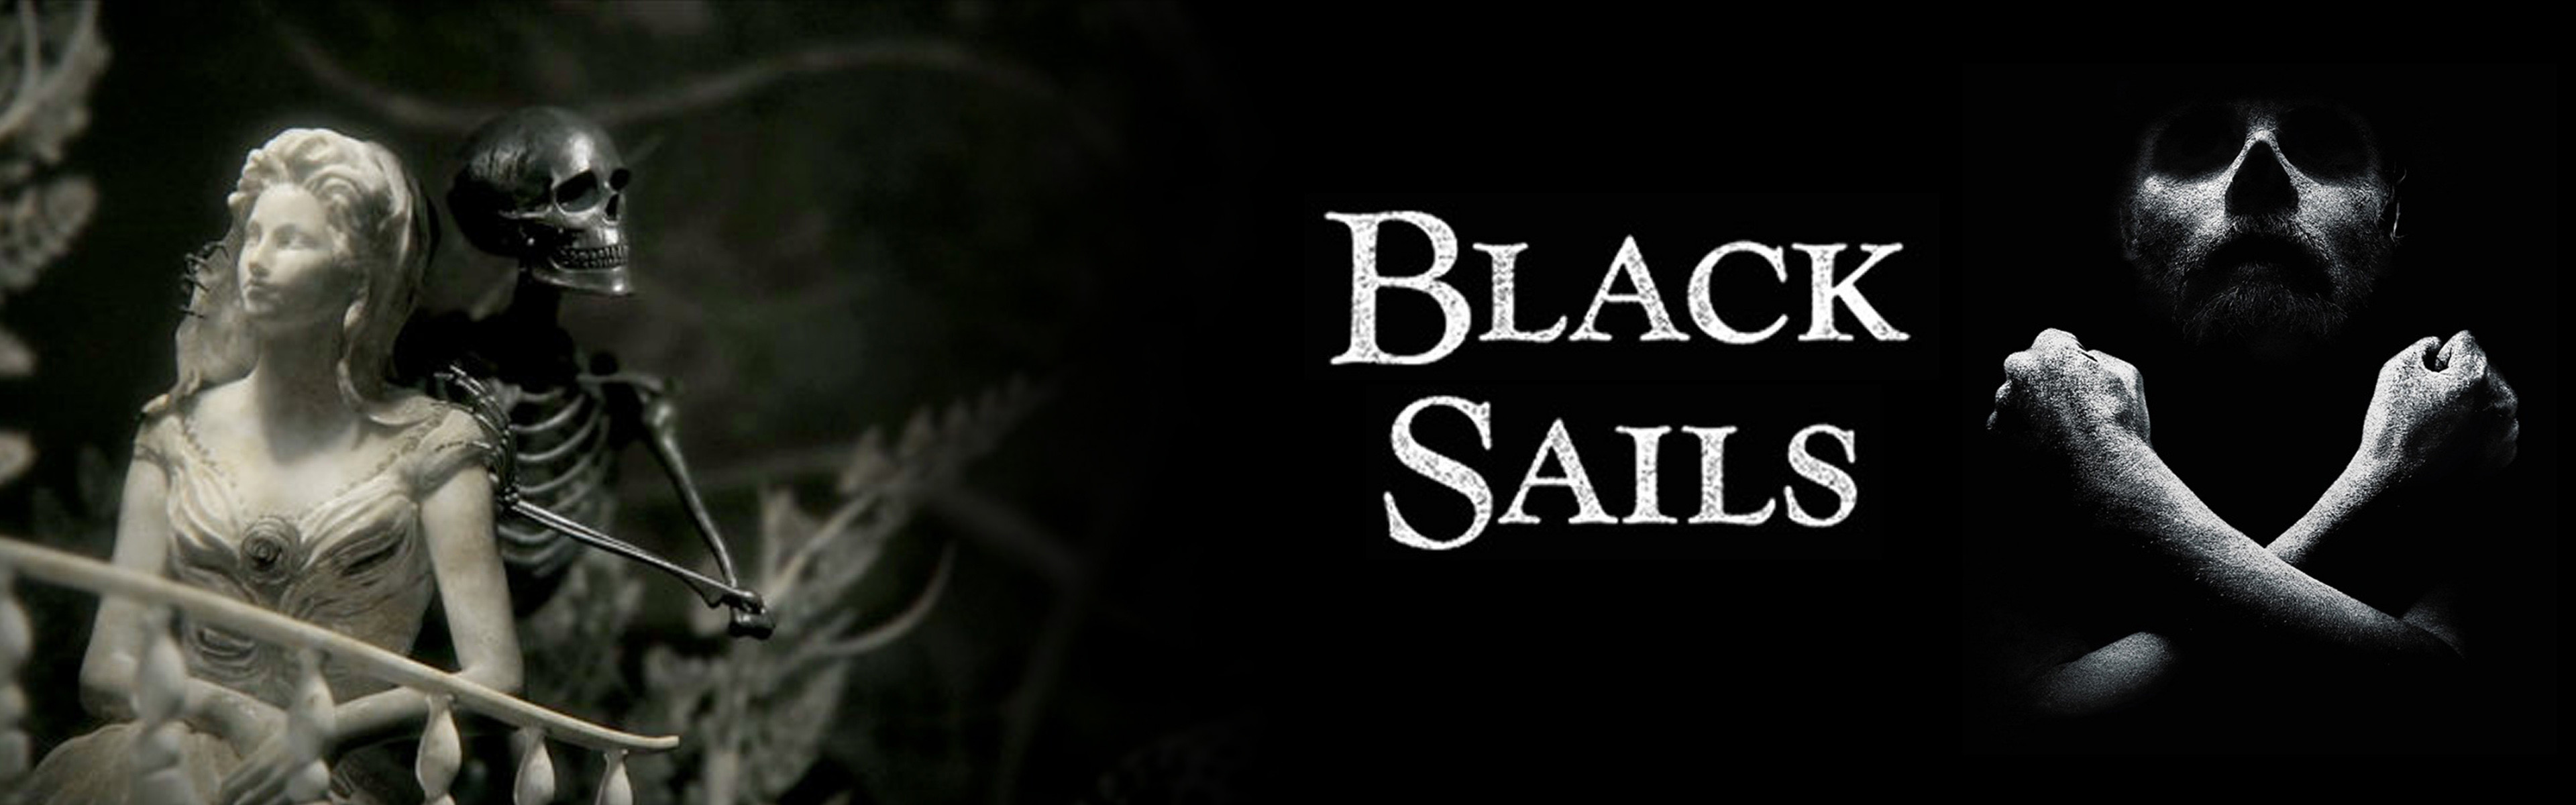 Black Sails DisplayBlackWallpaper